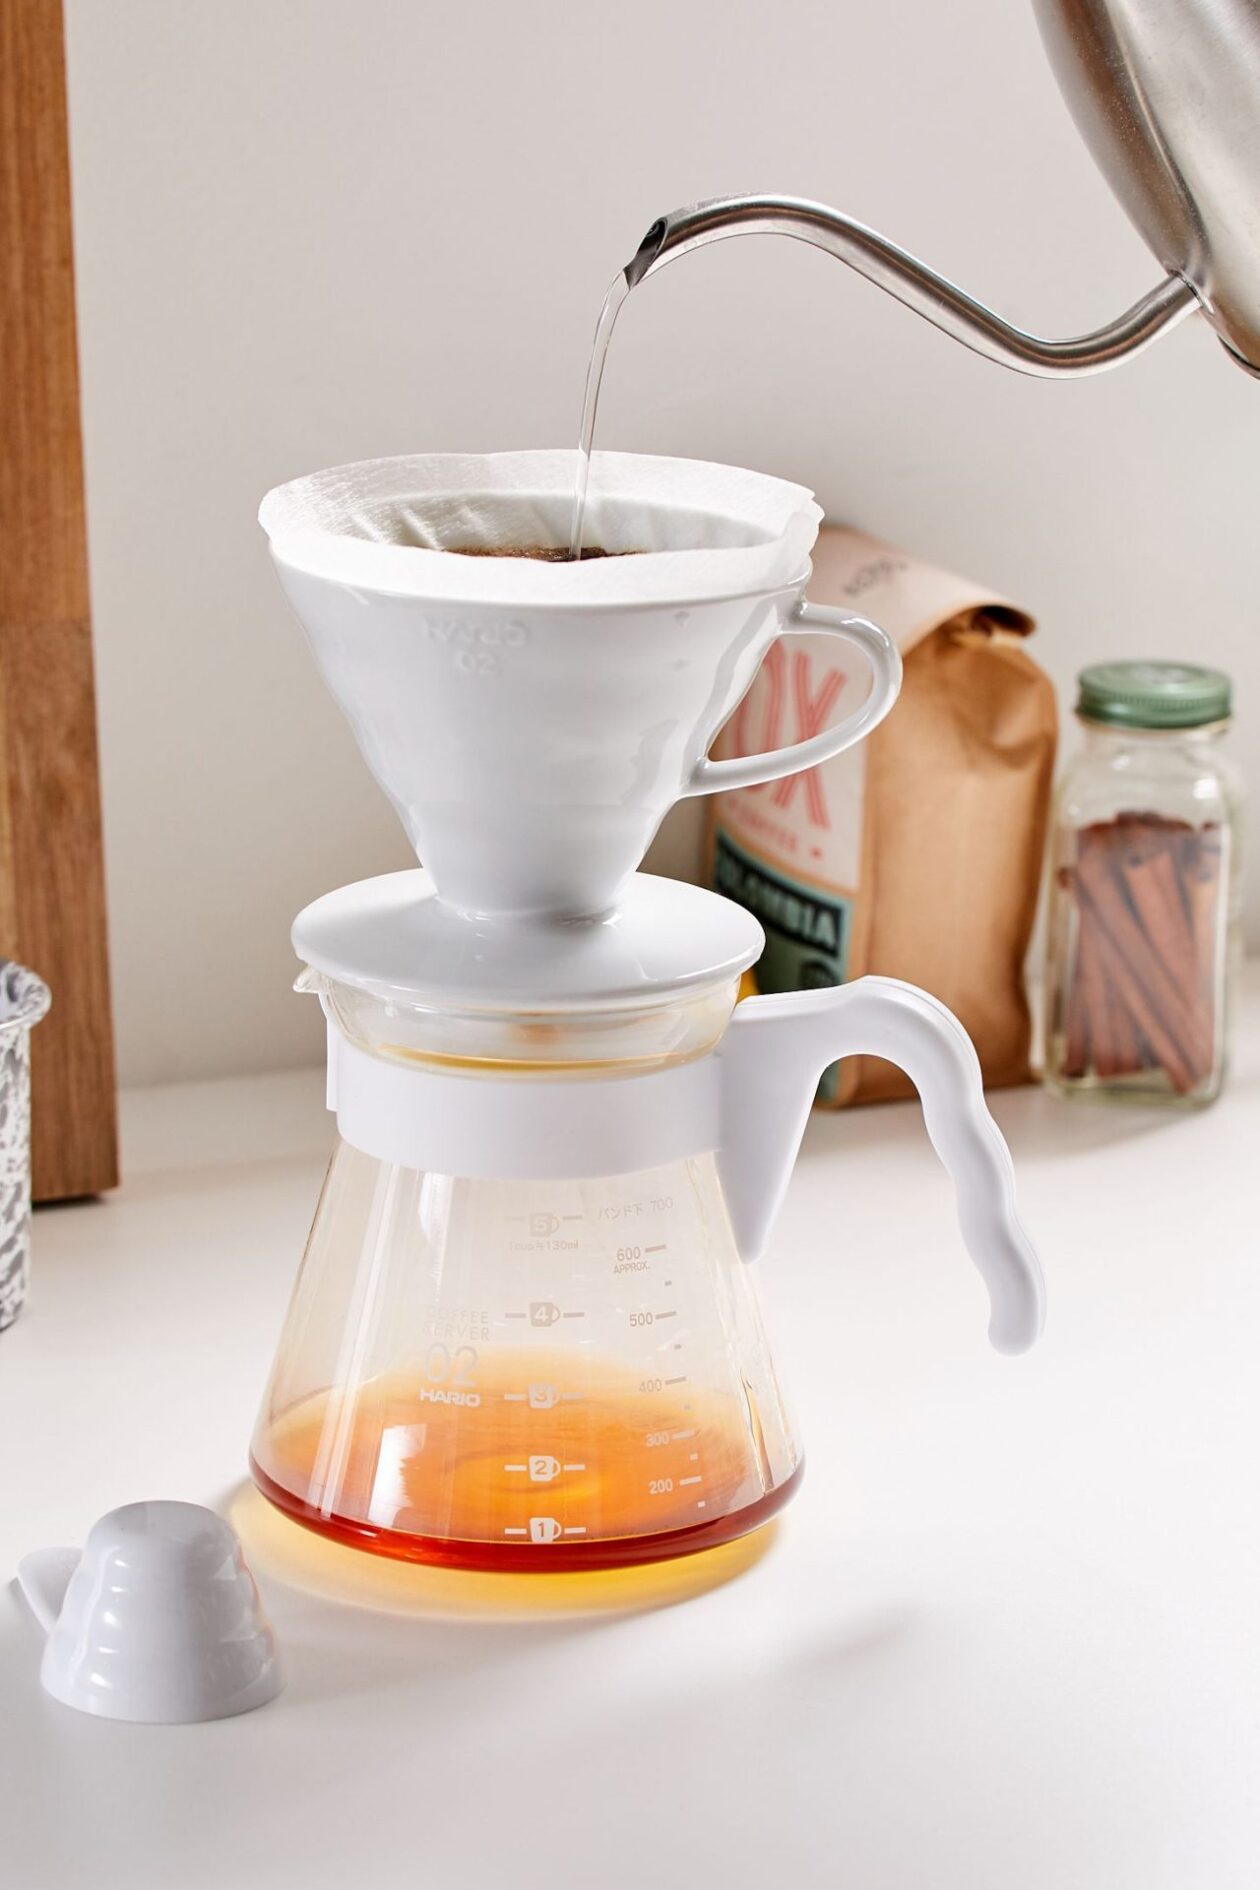 v60-coffee-maker-pic-1 - MATCH MADE COFFEE